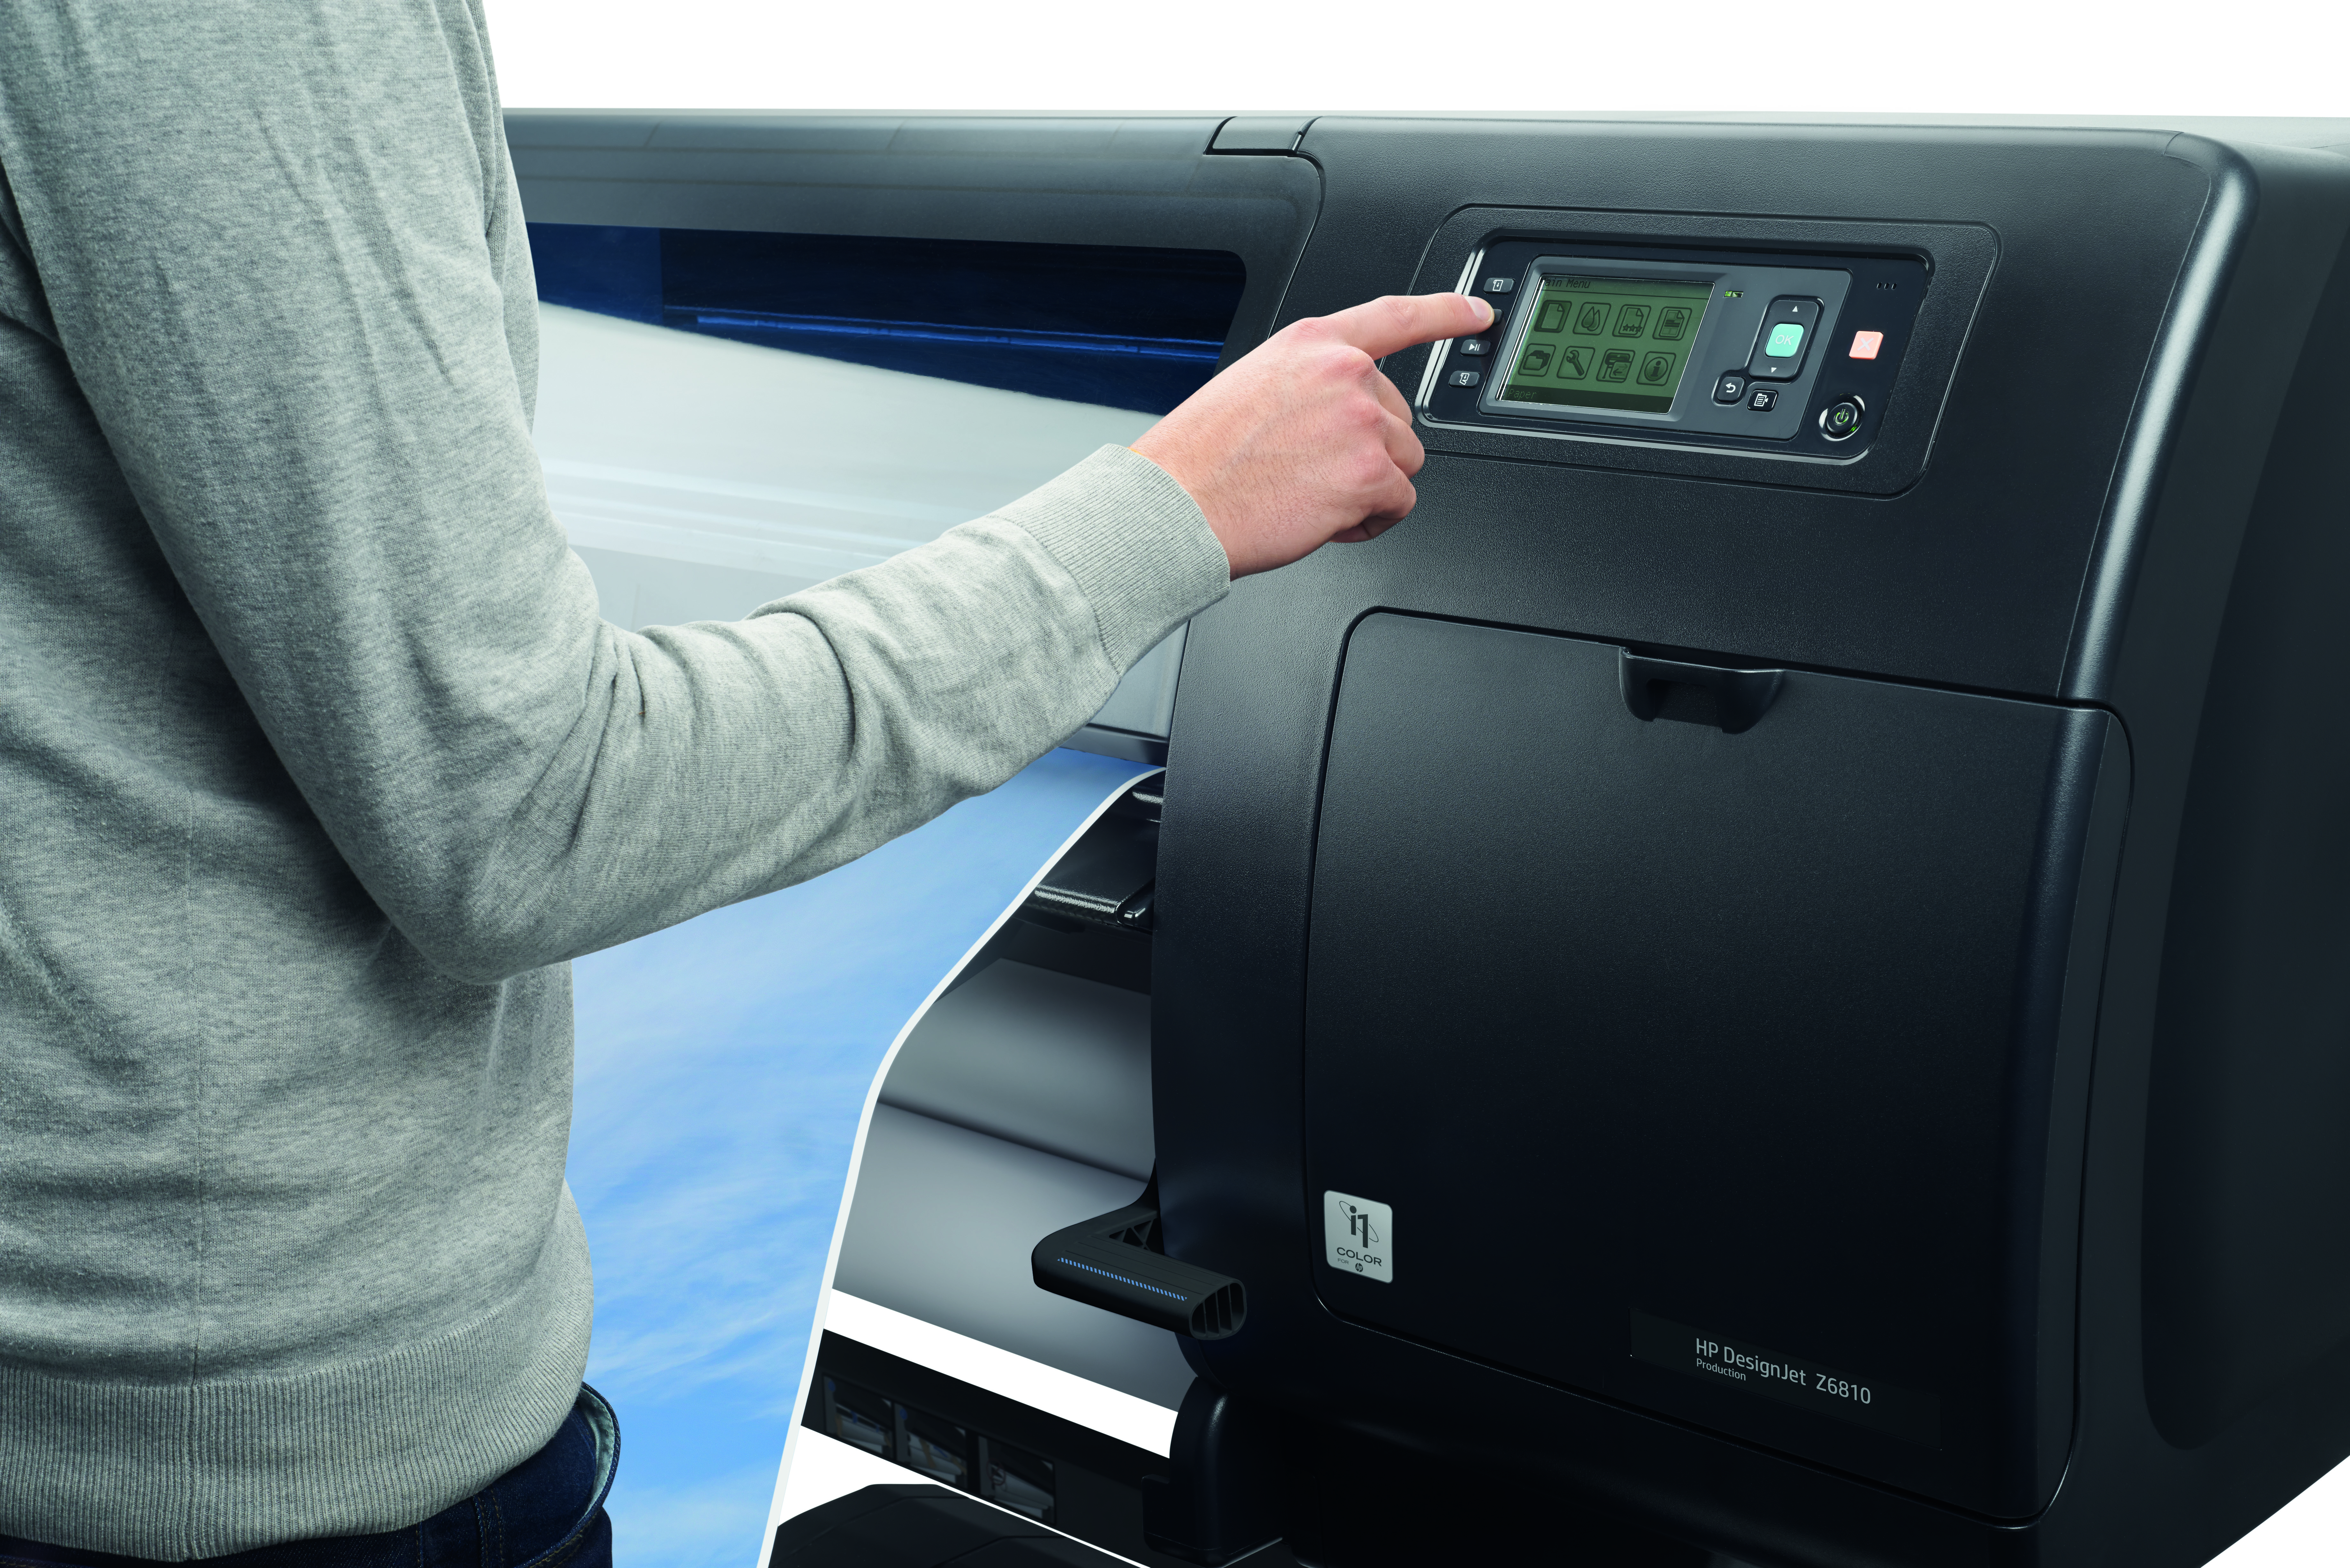 HP DesignJet Z6810 42" Printer